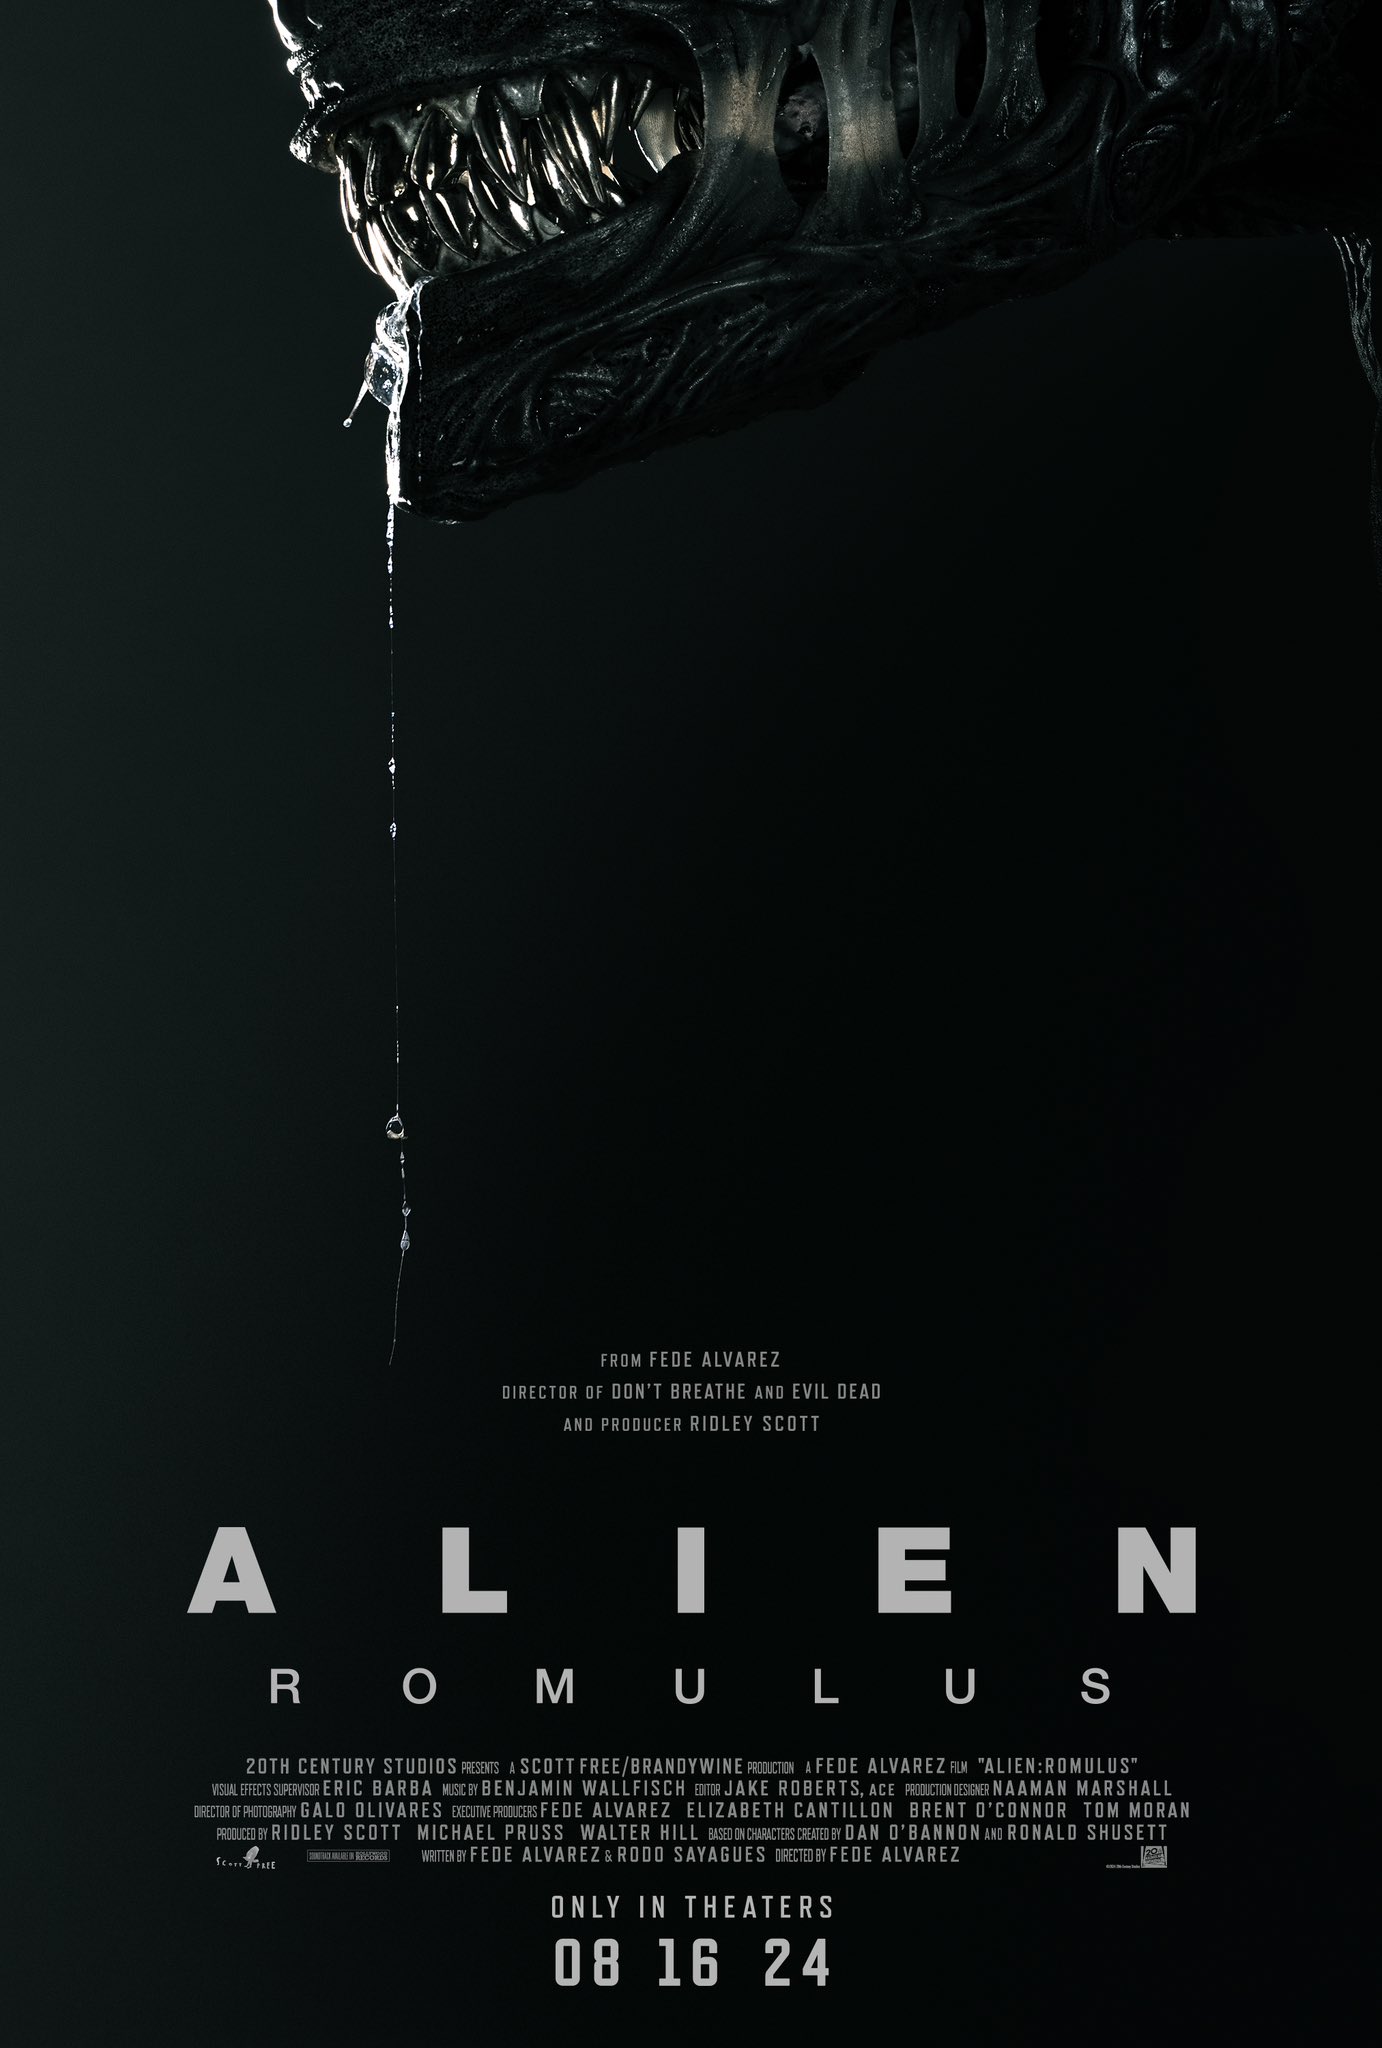 Alien: Romulus official movie poster